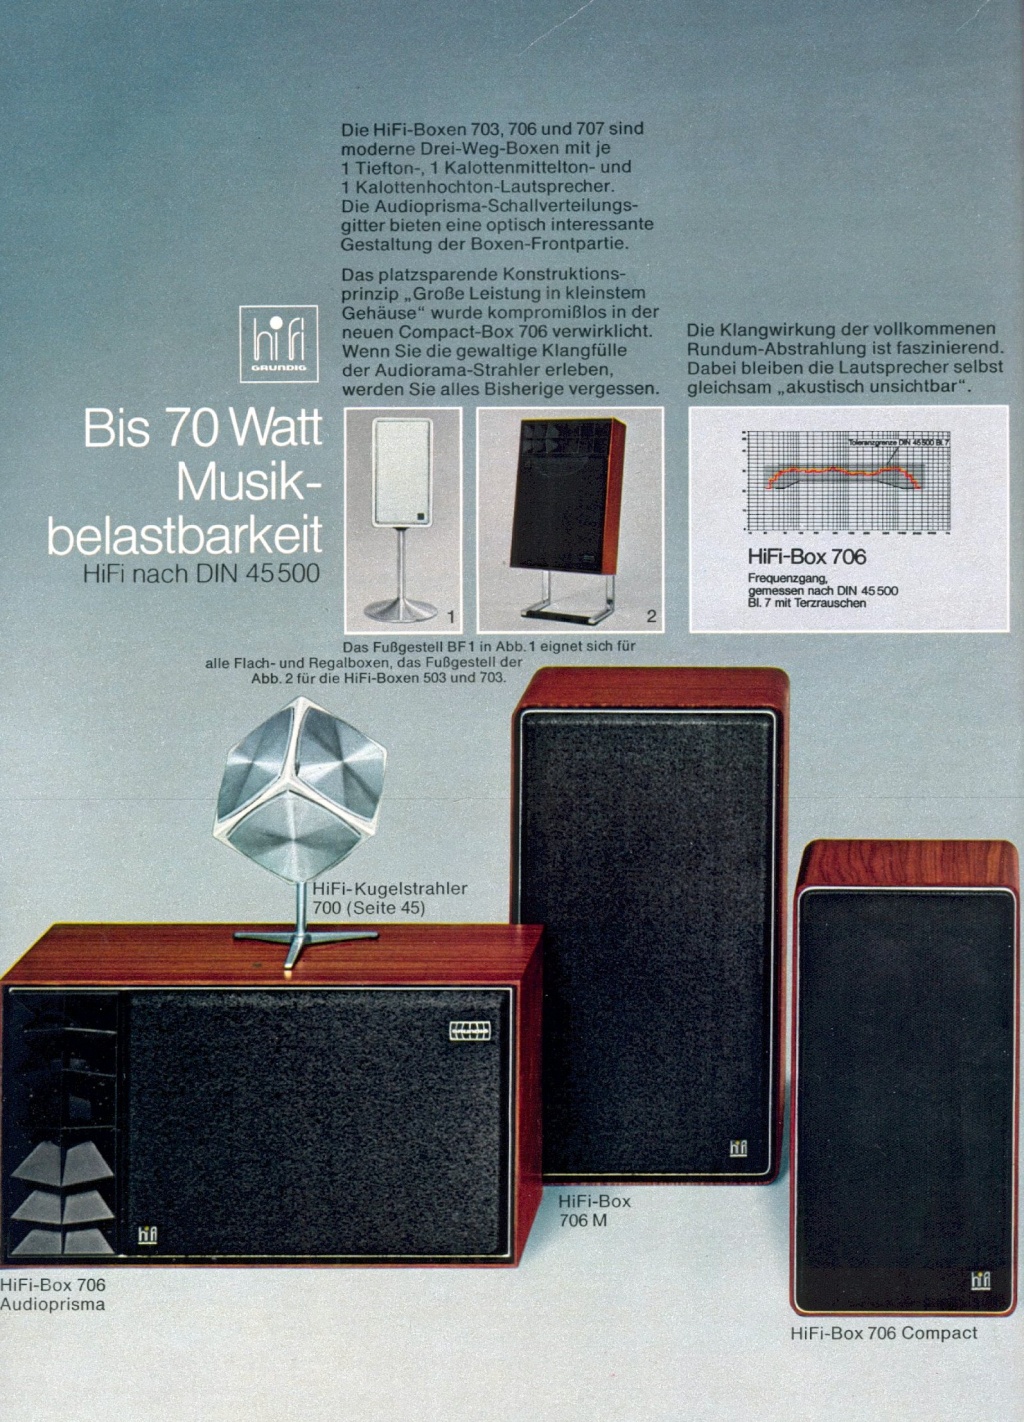 Grundig Hifi-Box 706 M-706 Audioprisma-706 Compact-Prospekt-1.jpg